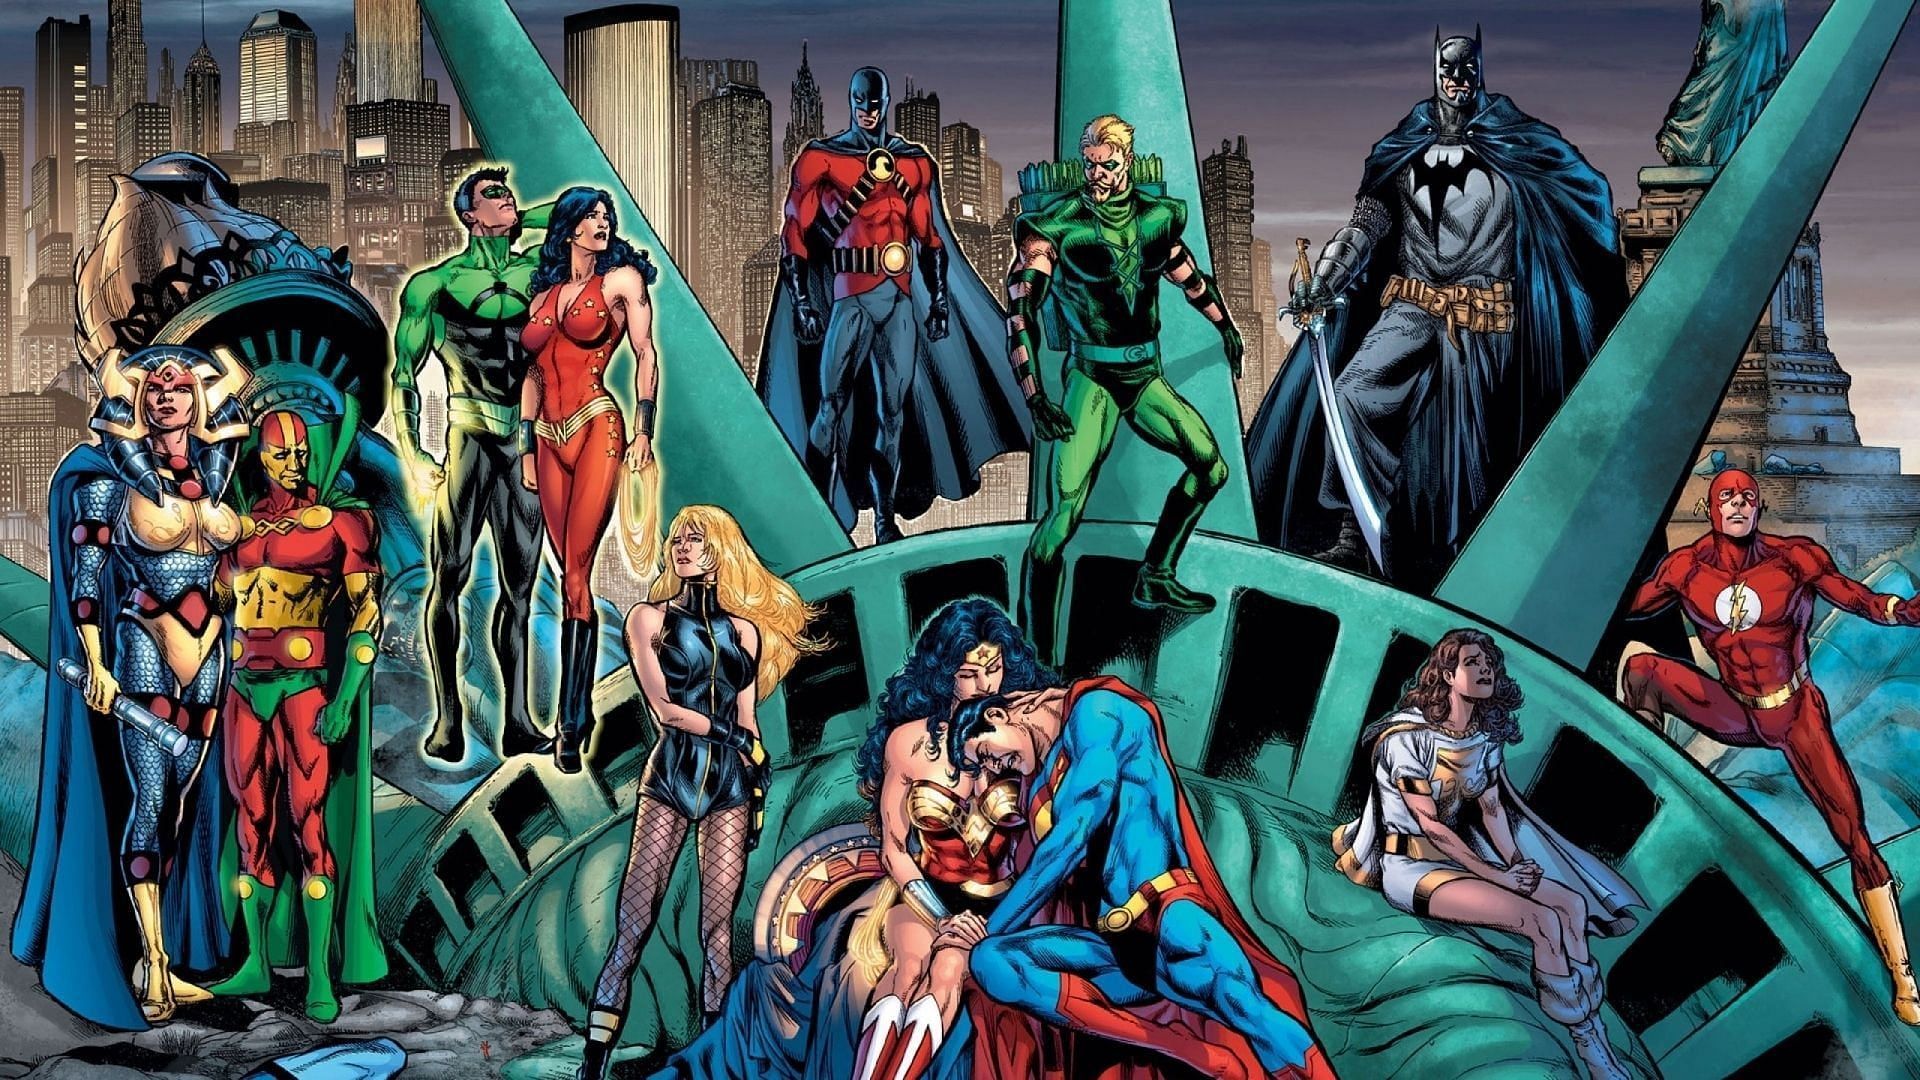 DC Comics had left an indelible mark on popular culture. (Image Via DC)